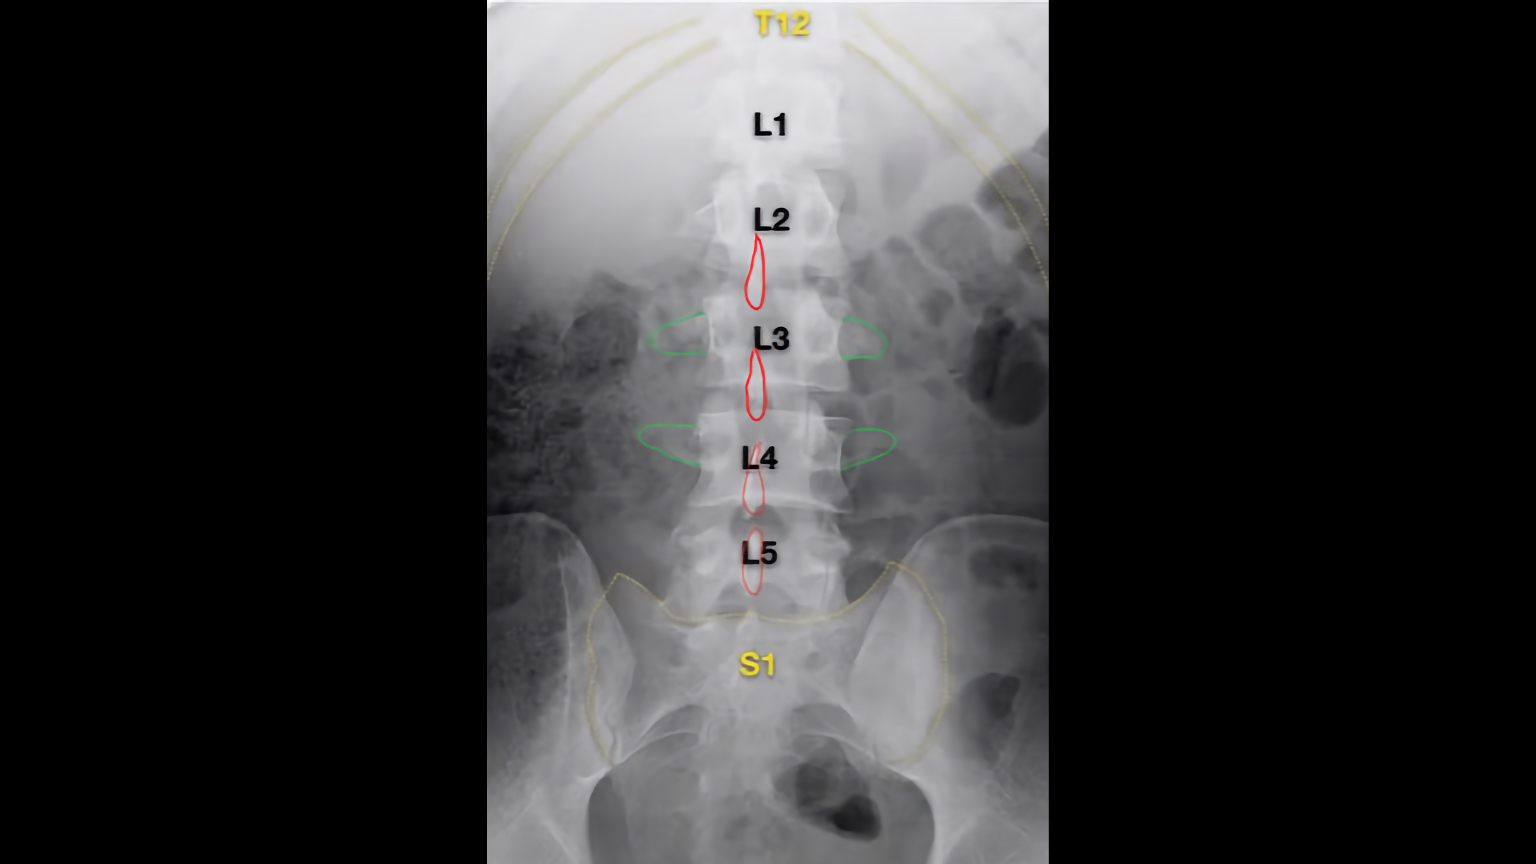 Normal lumbar spine anatomy